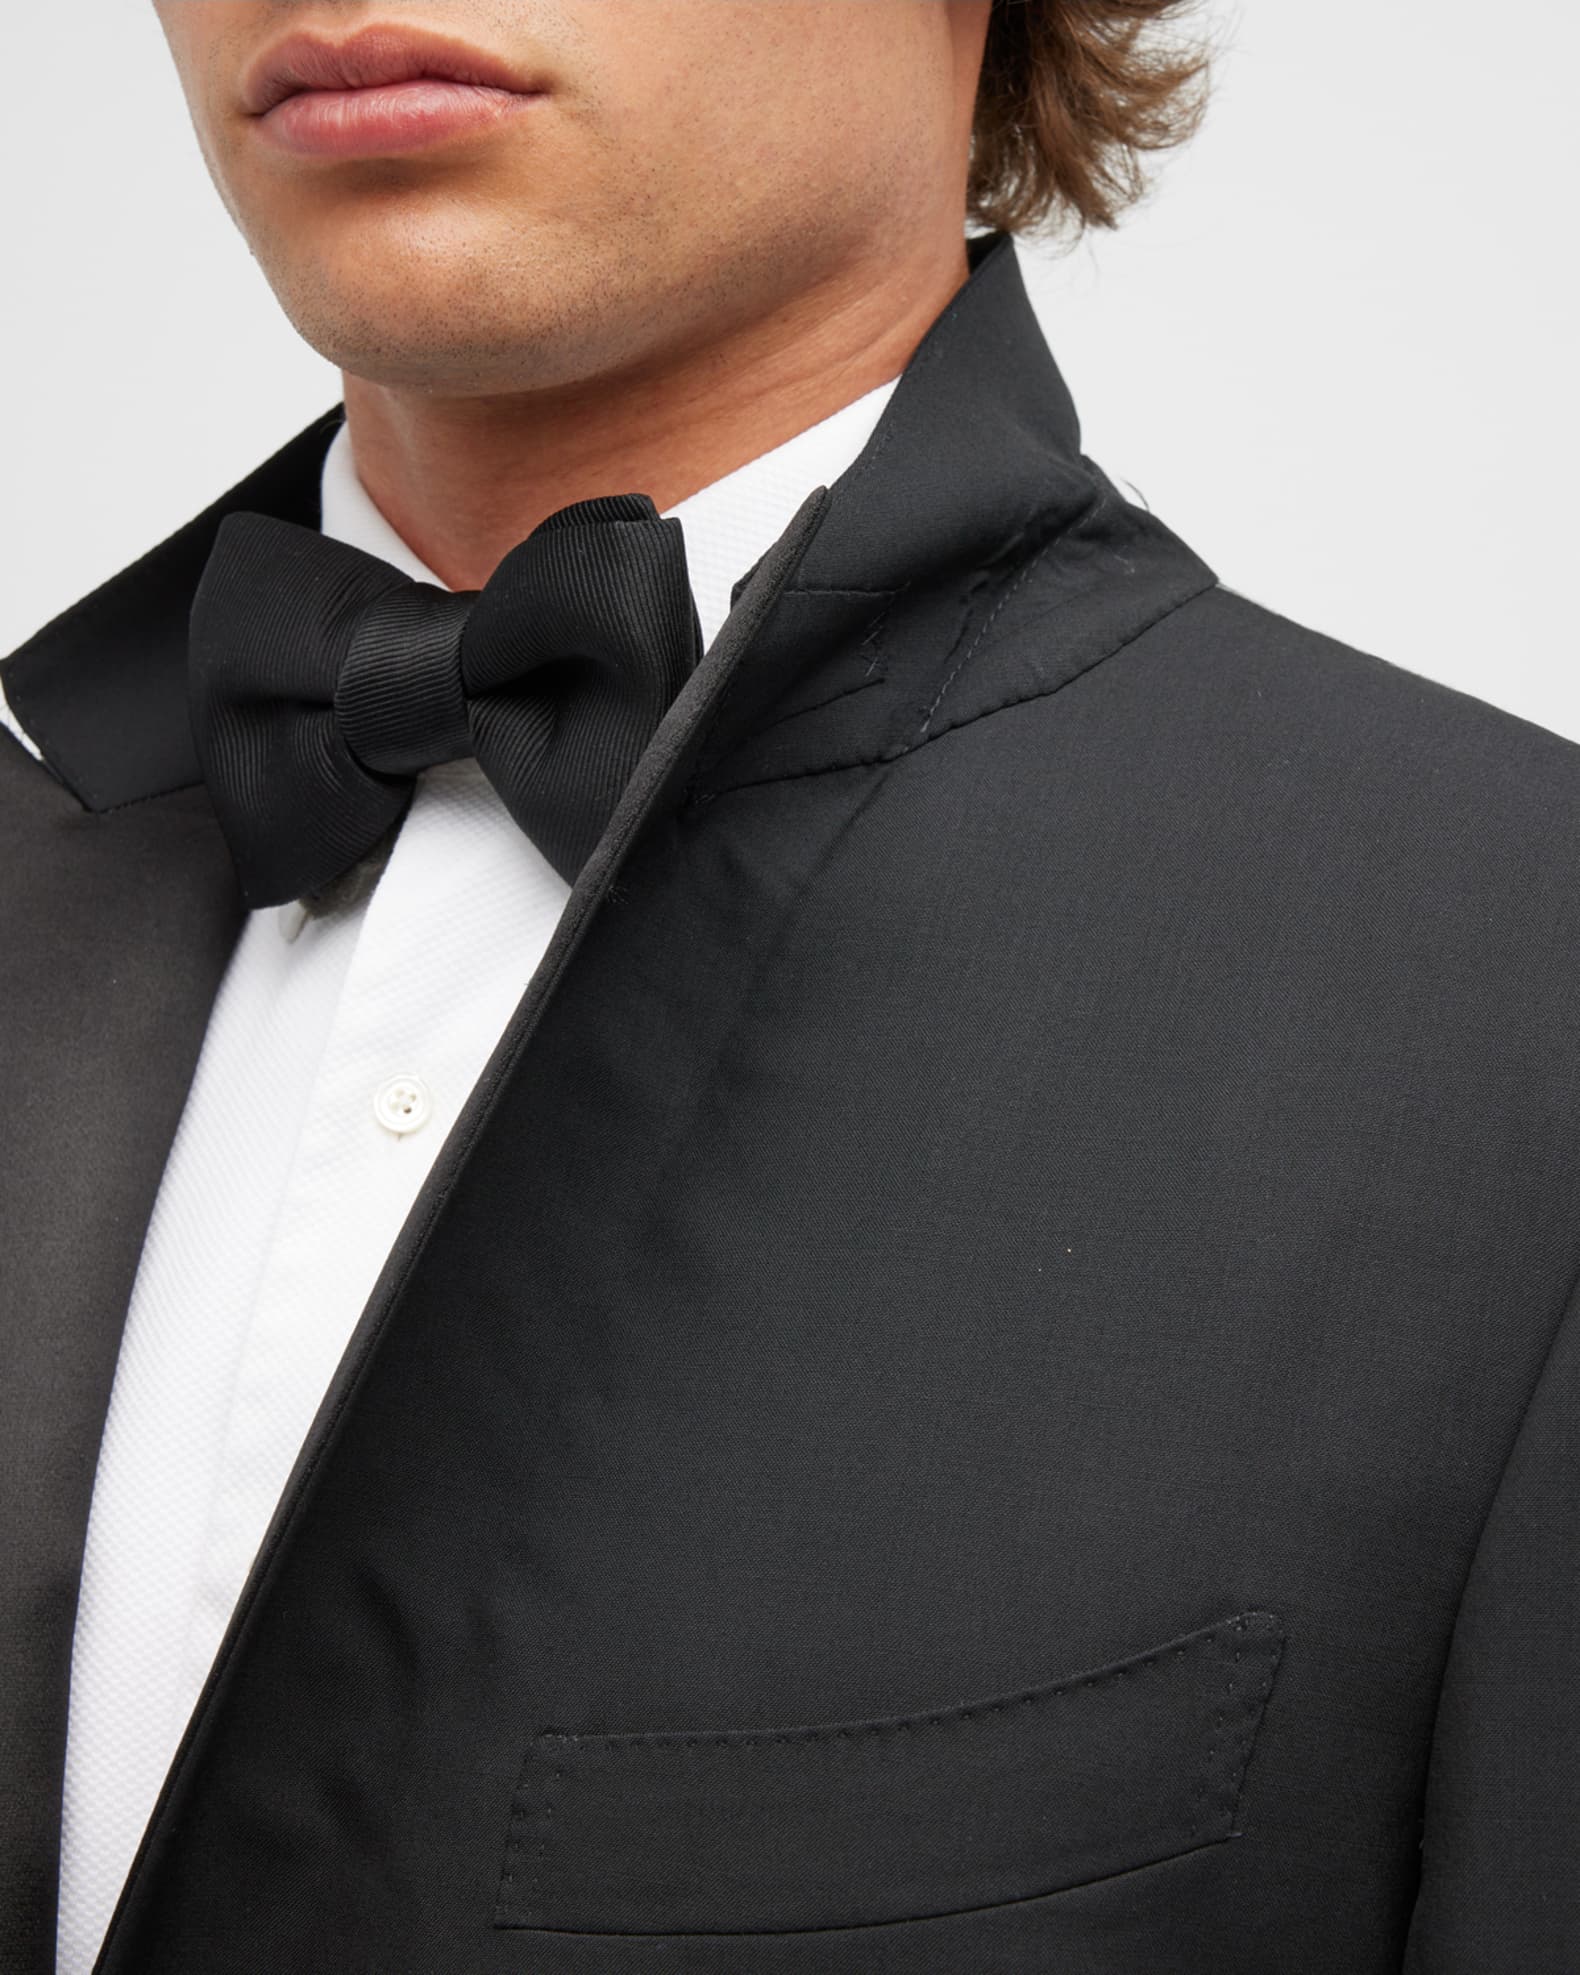 TOM FORD Men's Solid Wool Peak Tuxedo | Neiman Marcus